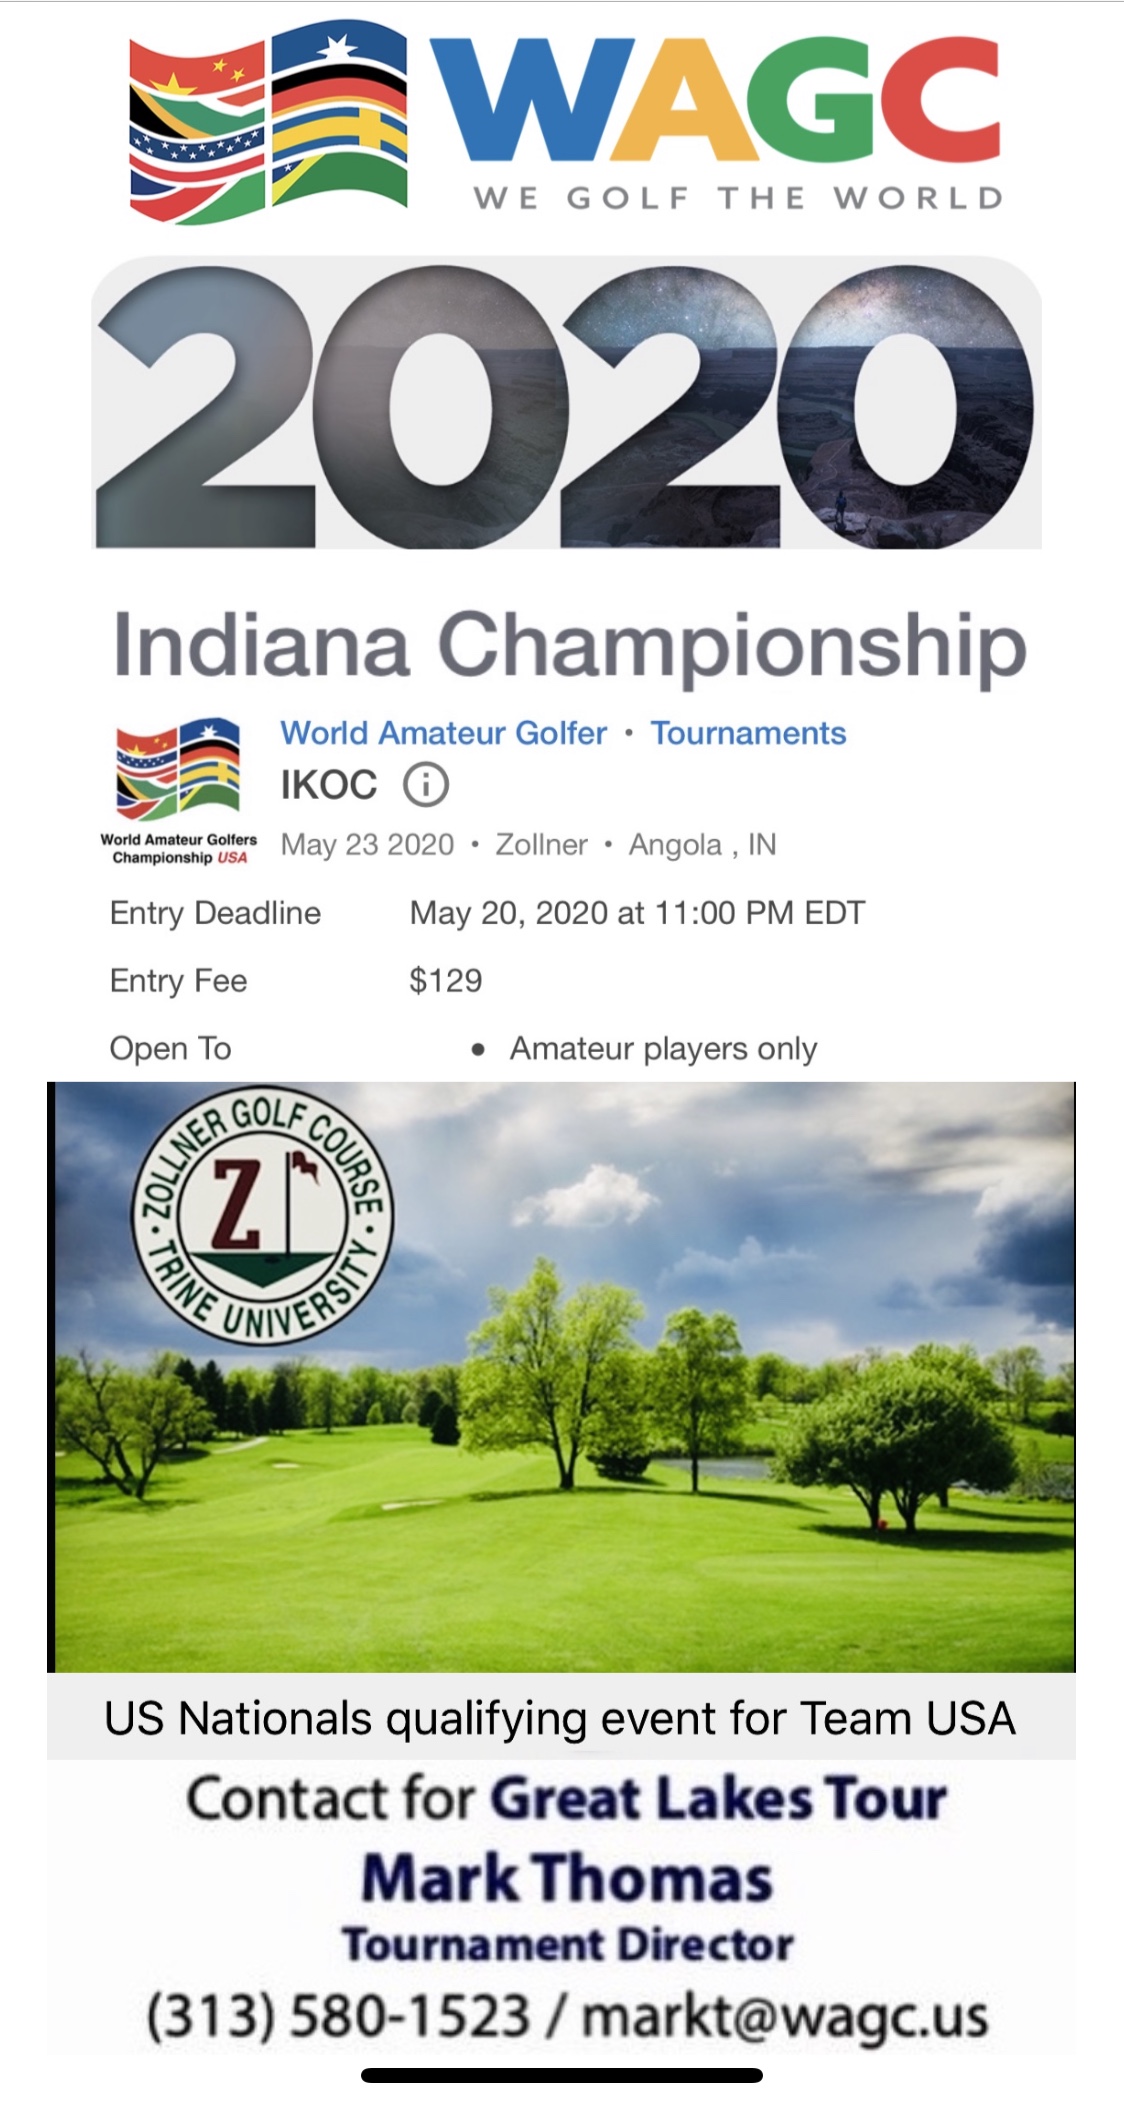 2020 World Amateur Golfer 2020 Indiana Championship